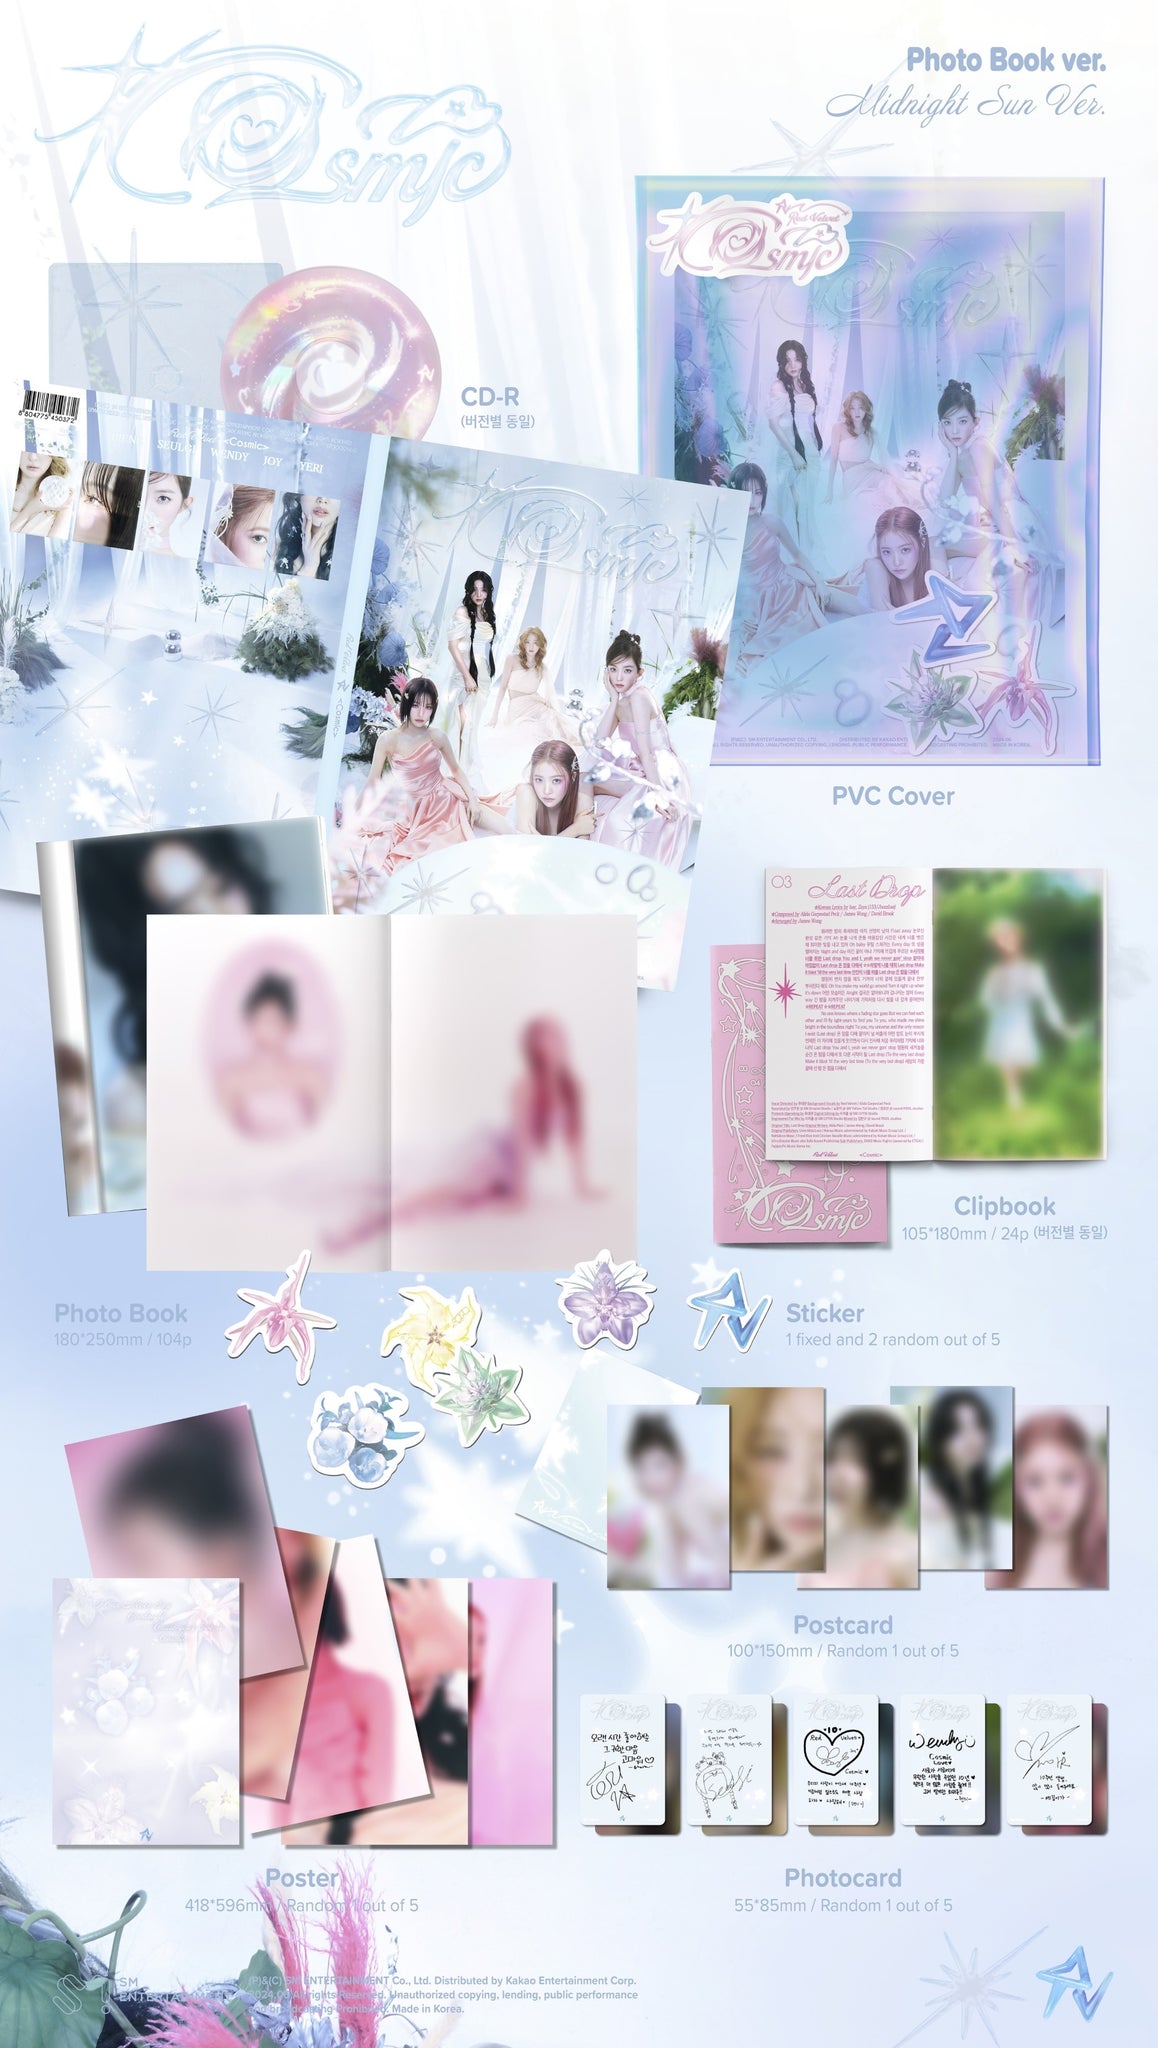 Red Velvet 7th Mini Album Cosmic (Photobook Ver.) - Midnight Sun Version Inclusions: PVC Cover, Photobook, Clipbook, CD, Stickers, Postcard, Folded Poster, Photocard